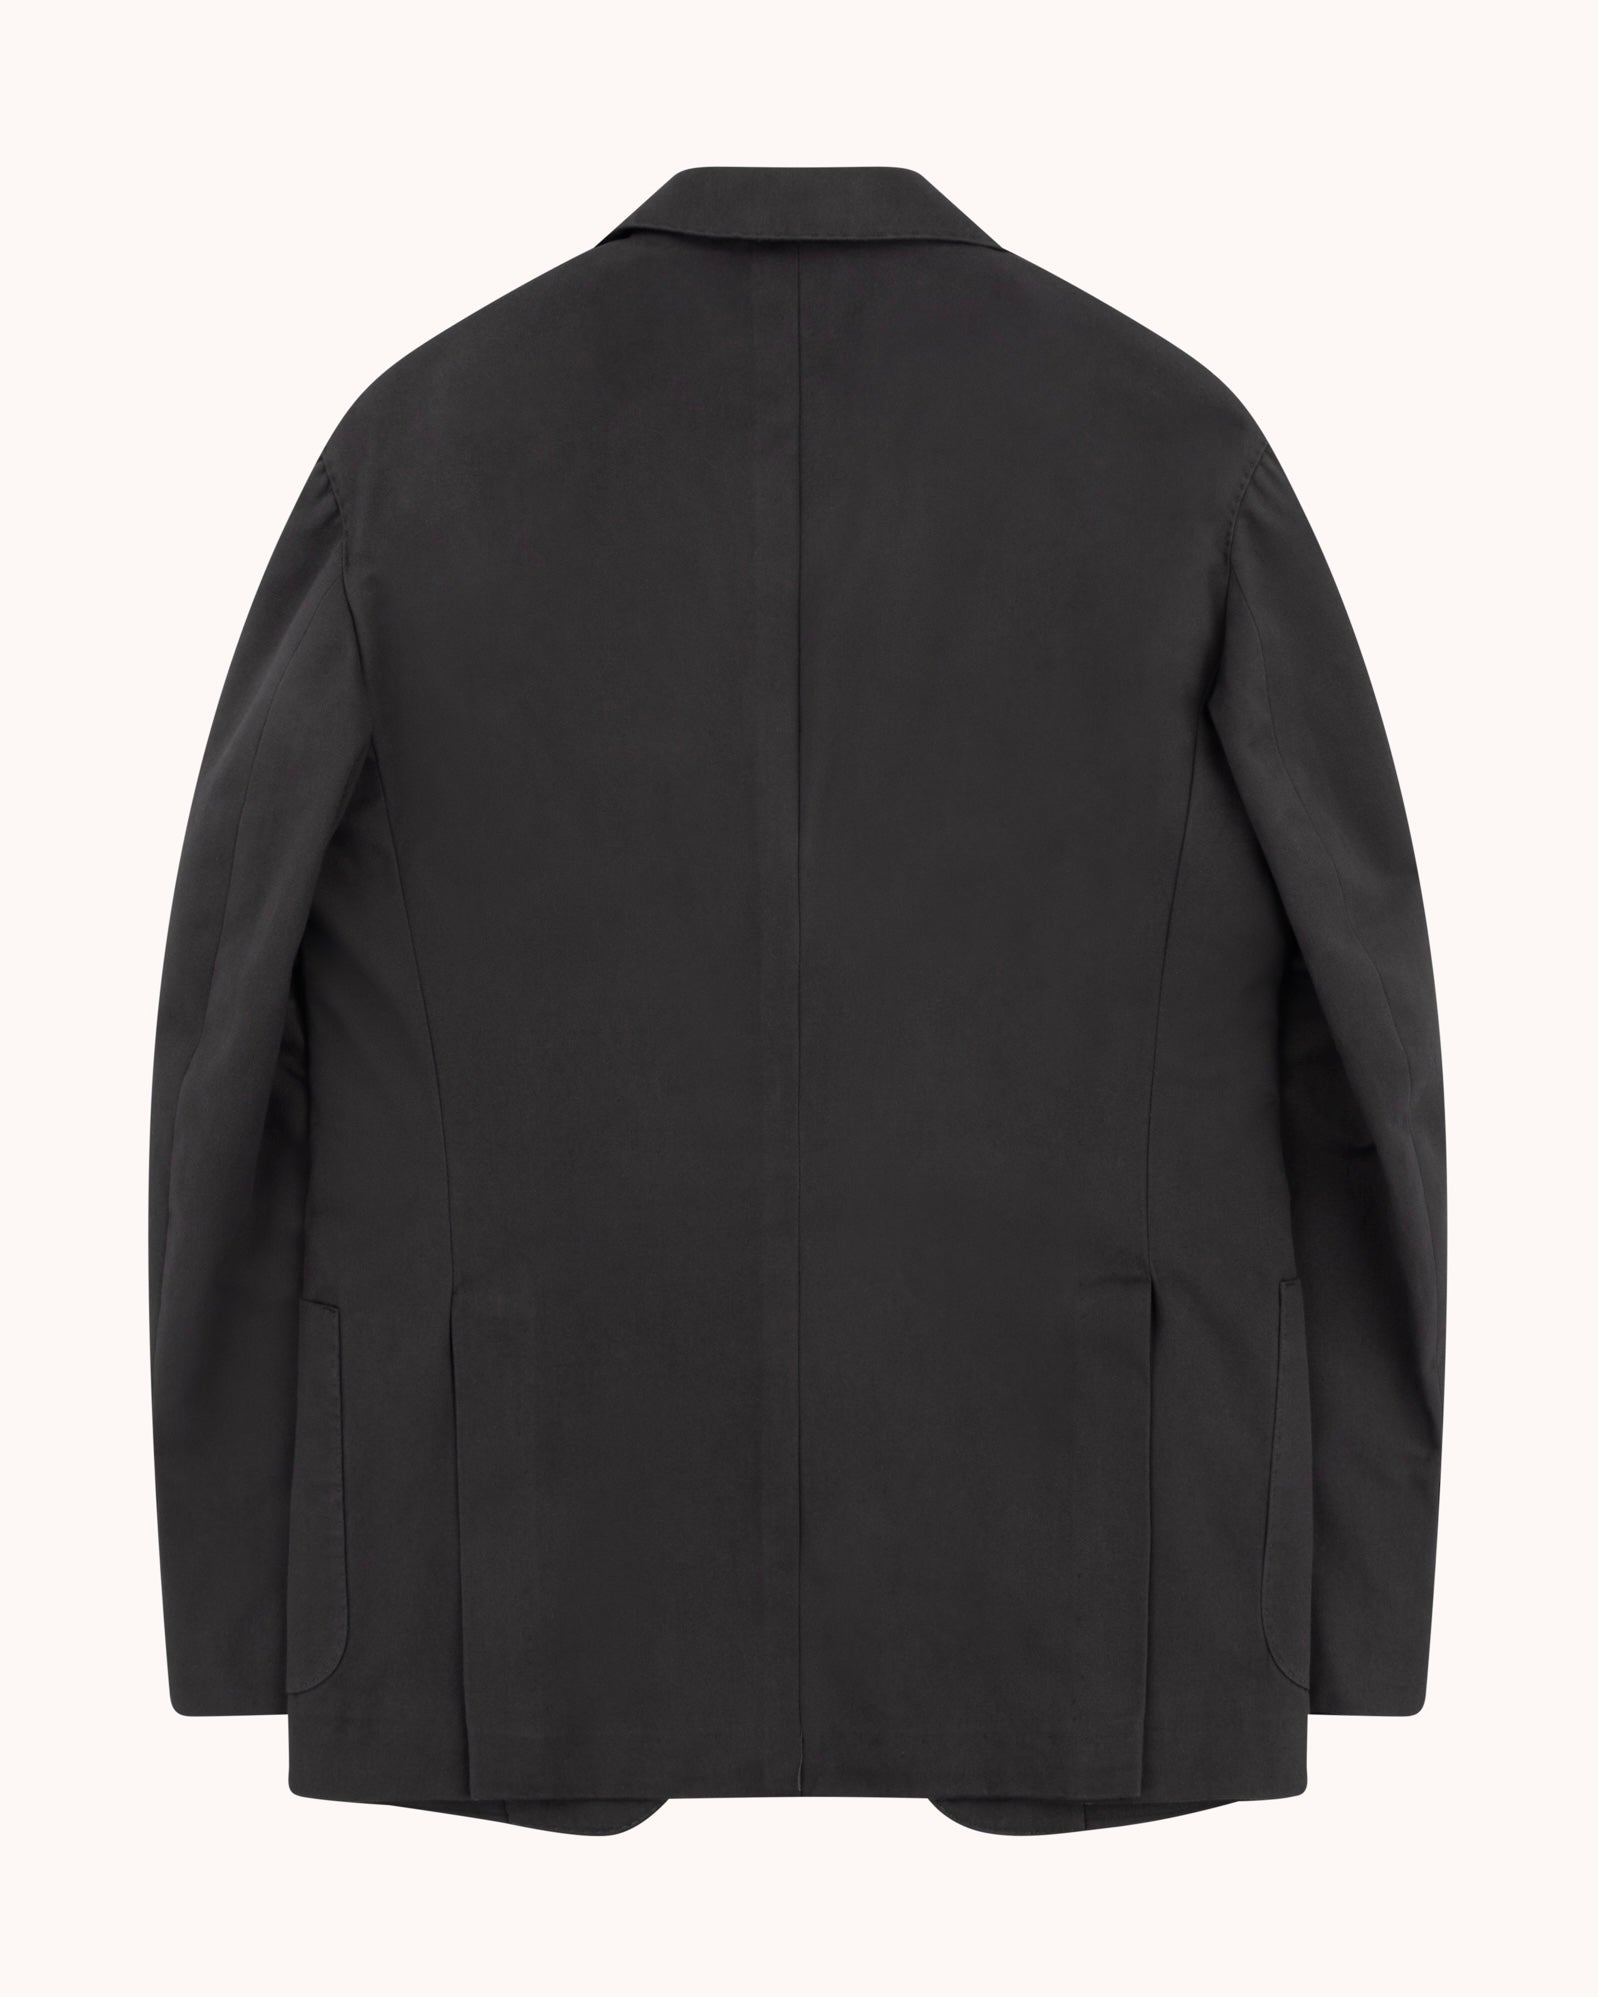 Sport Jacket - Charcoal Brushed Cotton